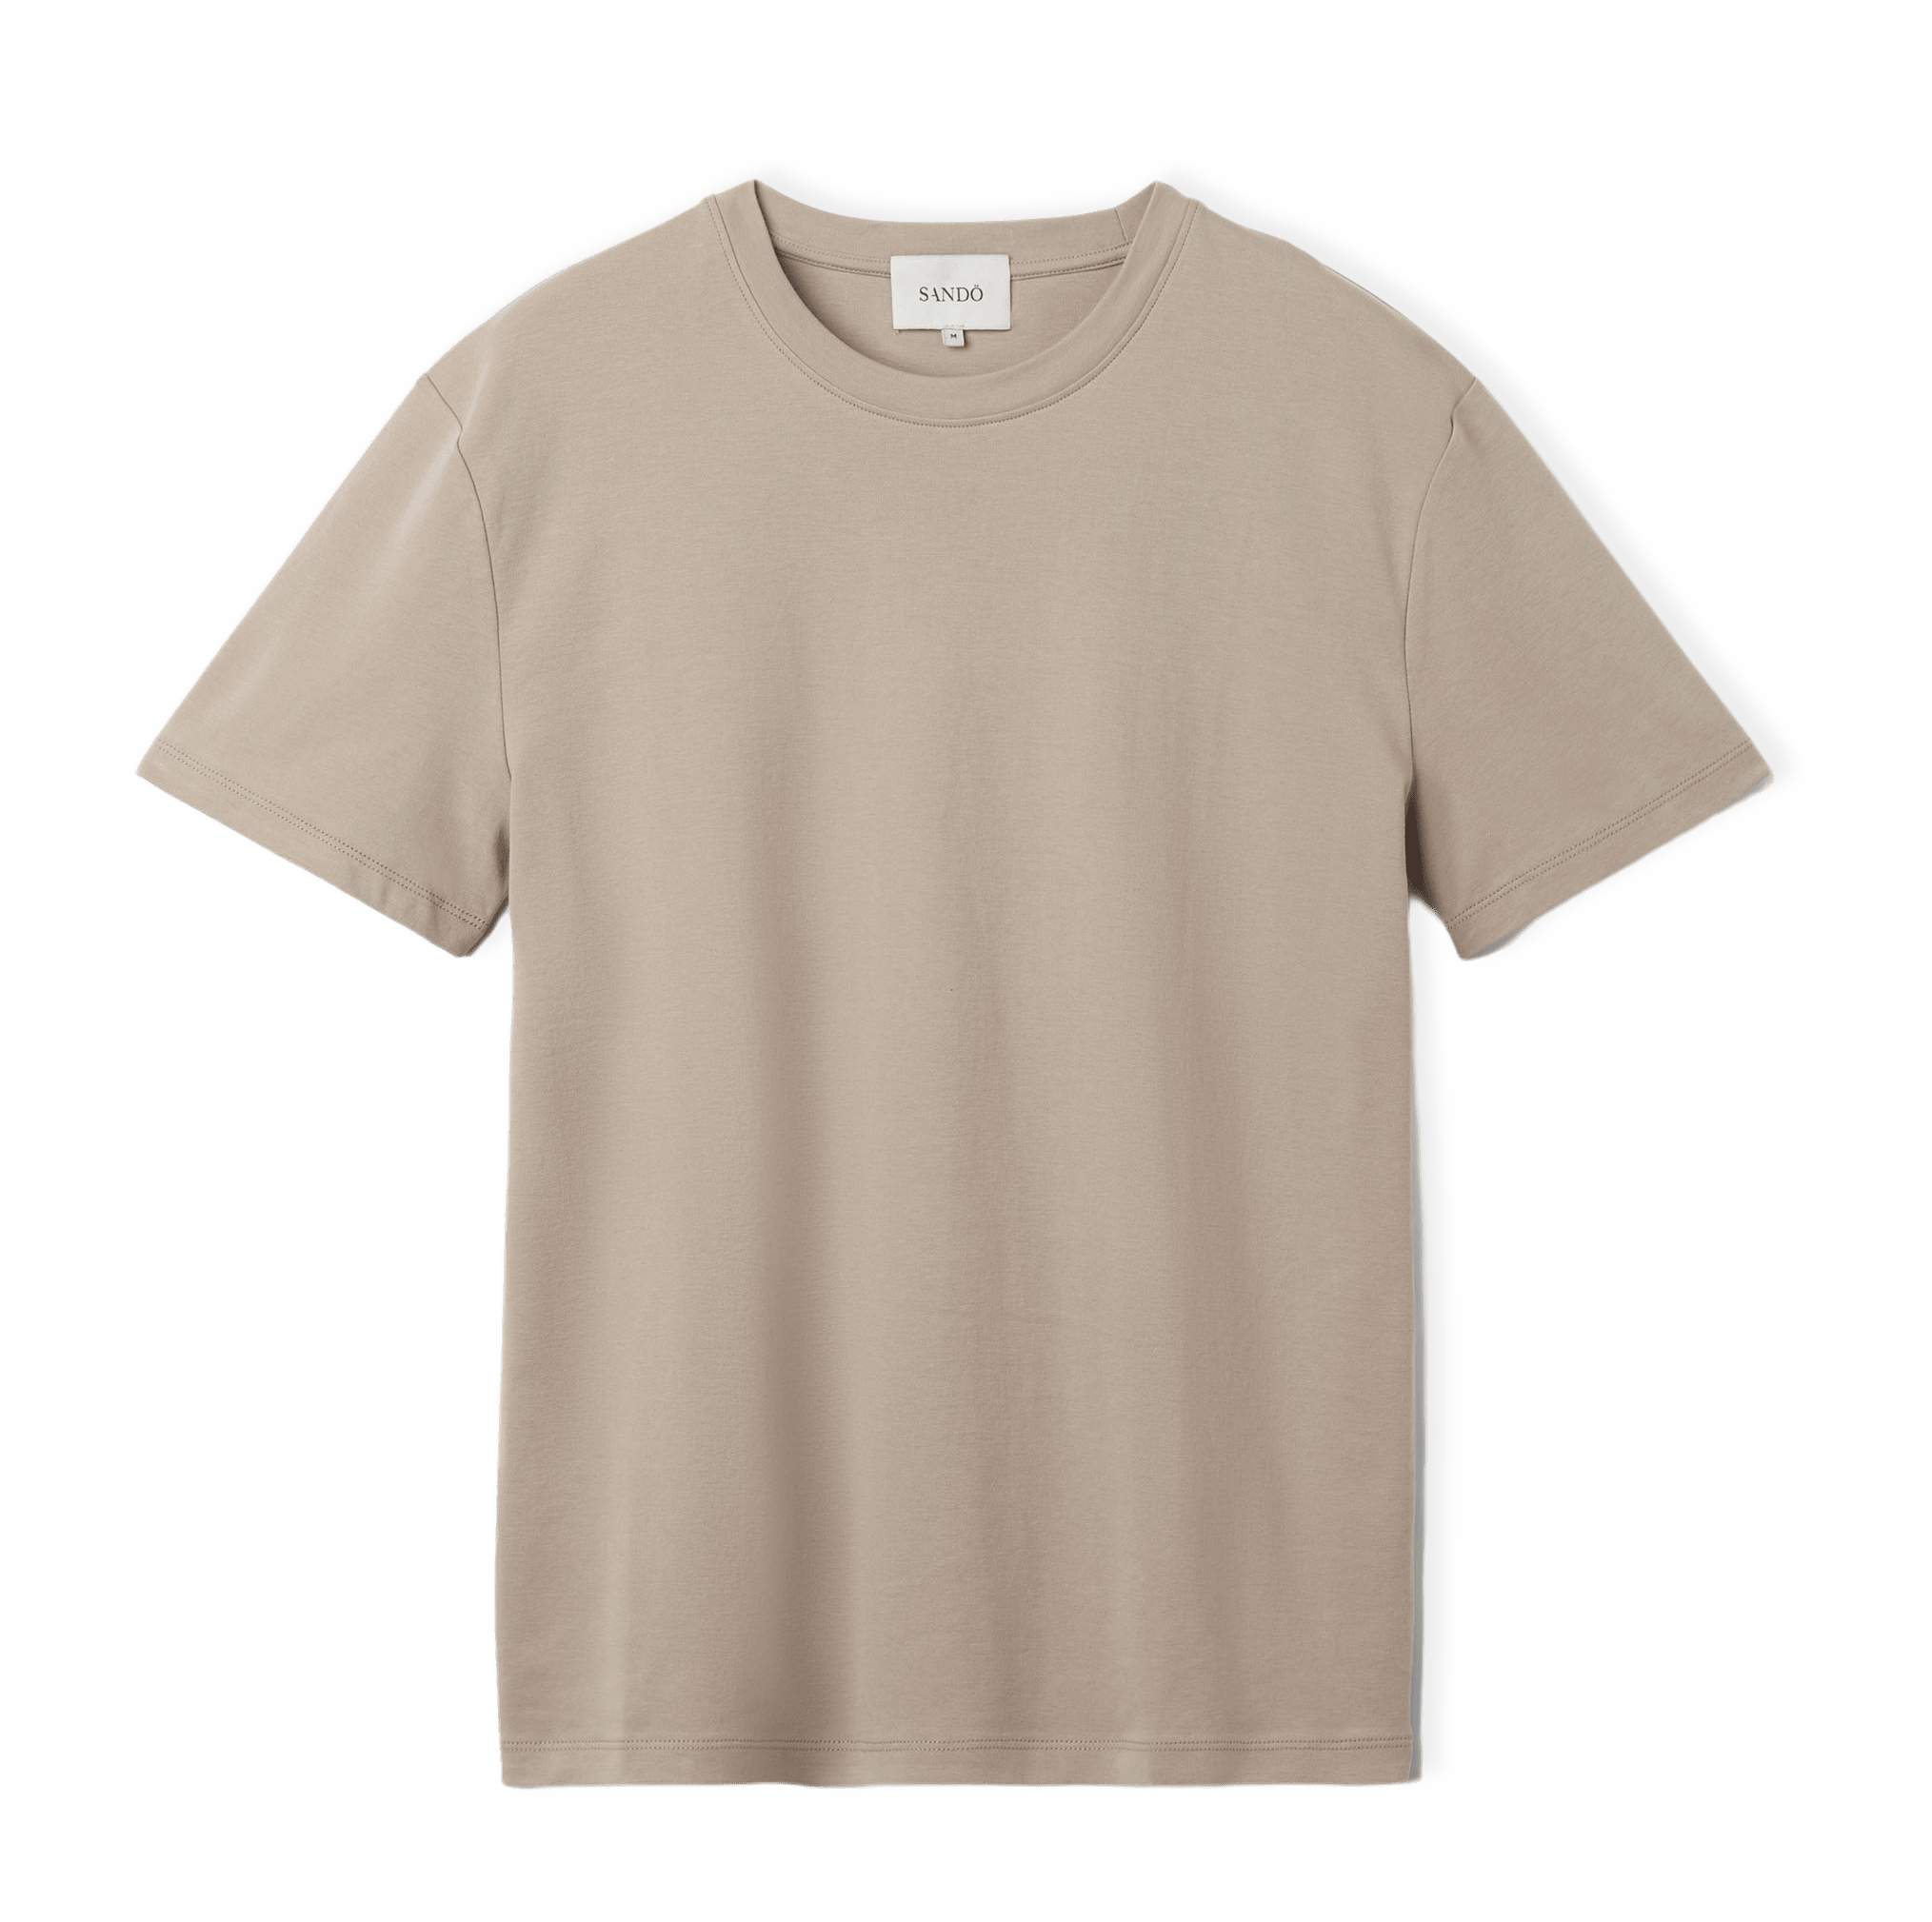 T-shirt LEON från SANDÖ